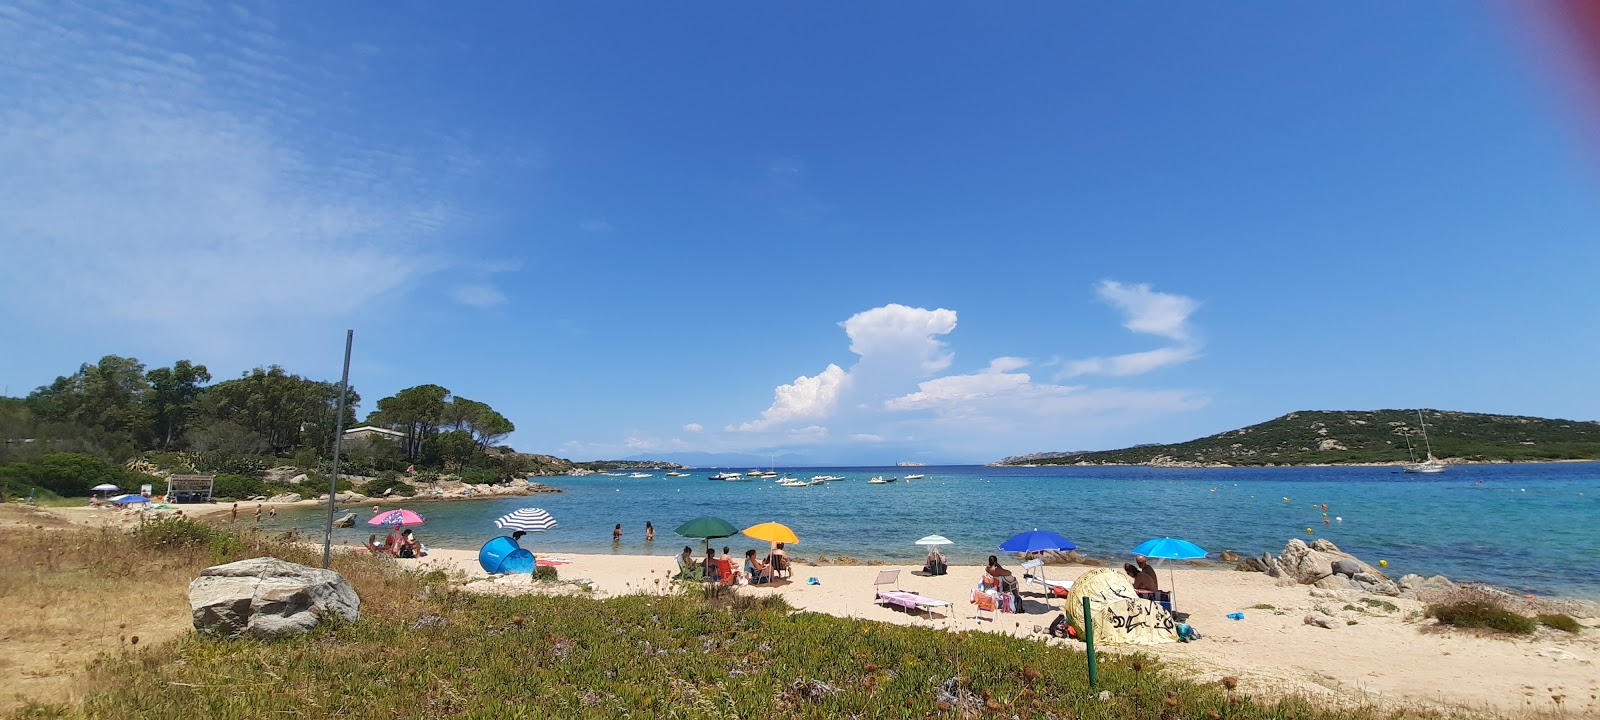 Photo of Spiaggia Angolo Azzurro with bright sand surface